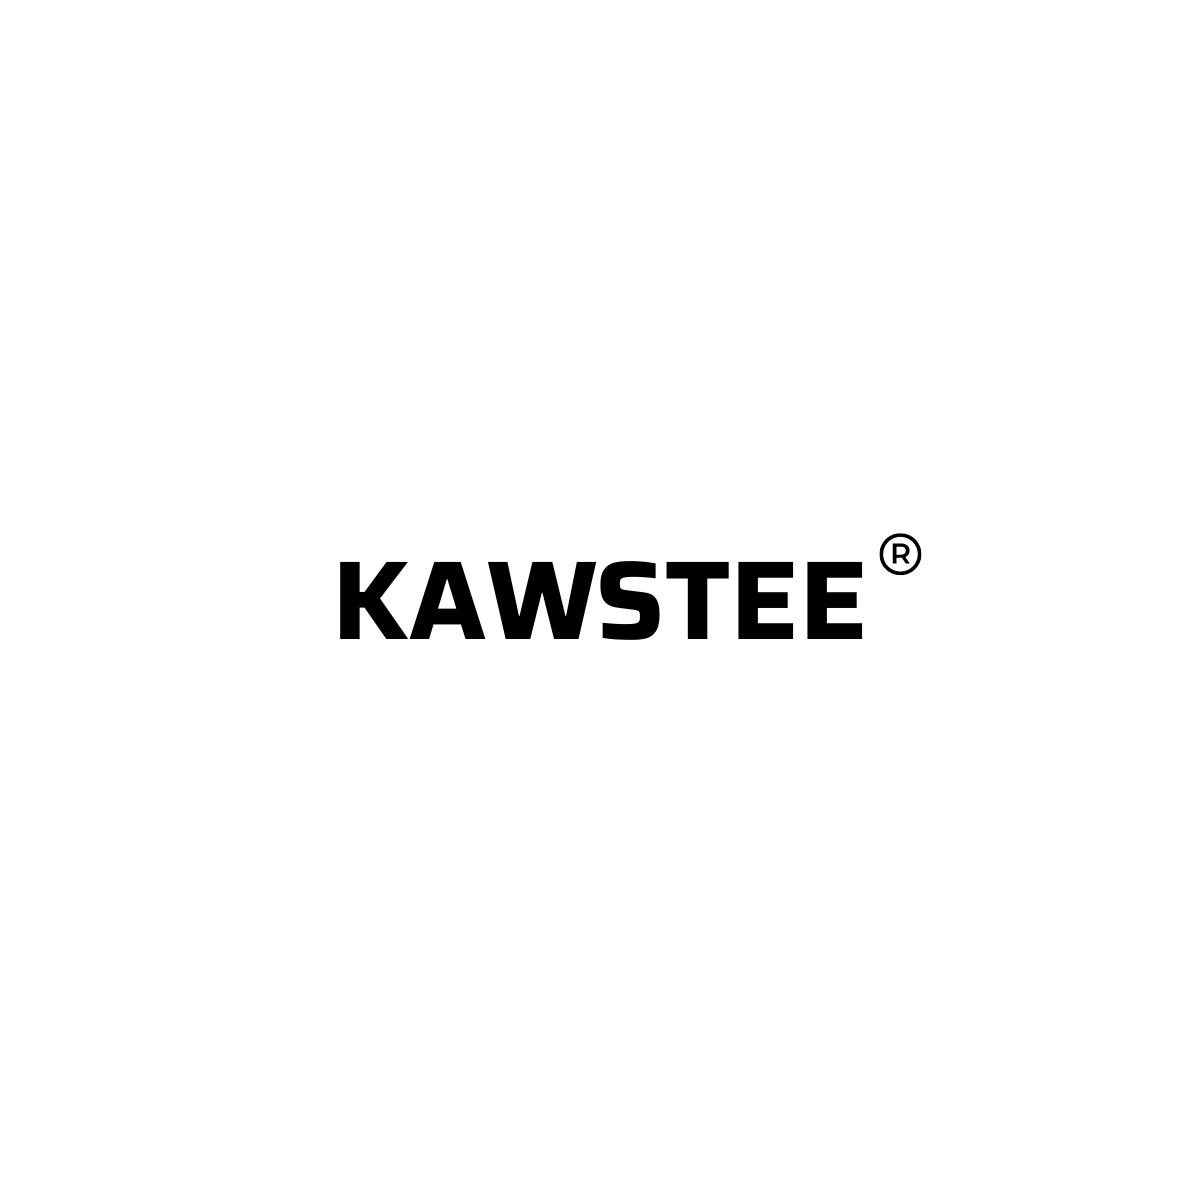 KAWSTEE - YOUR CHOICE